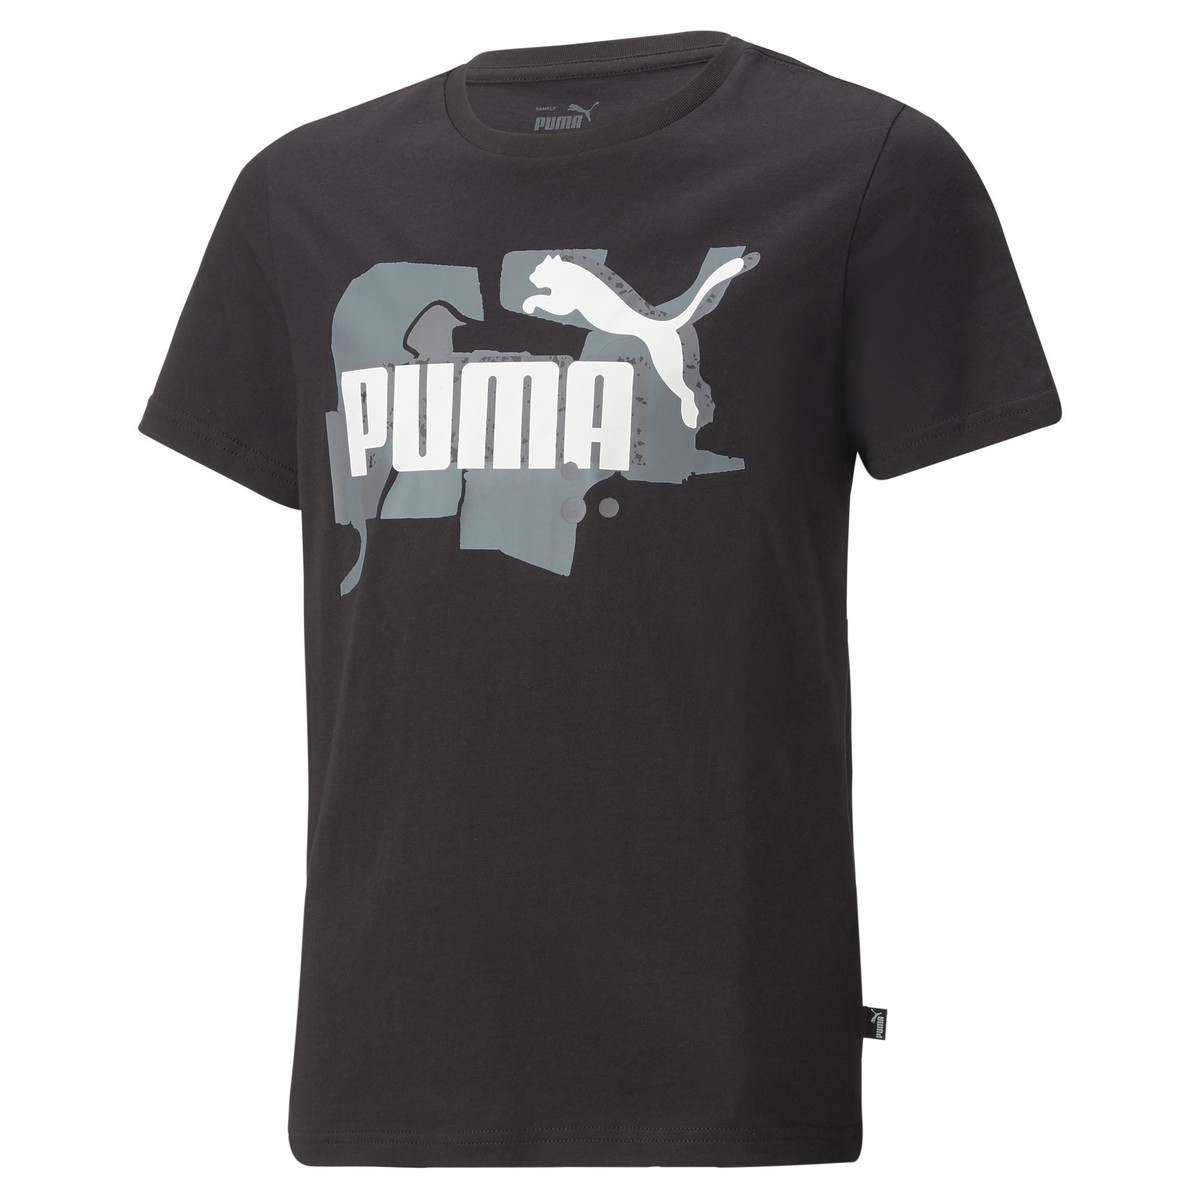 STREET LOGO ESS Free NET Spartoo Child Black ART delivery short-sleeved Clothing - ! - t-shirts | Puma